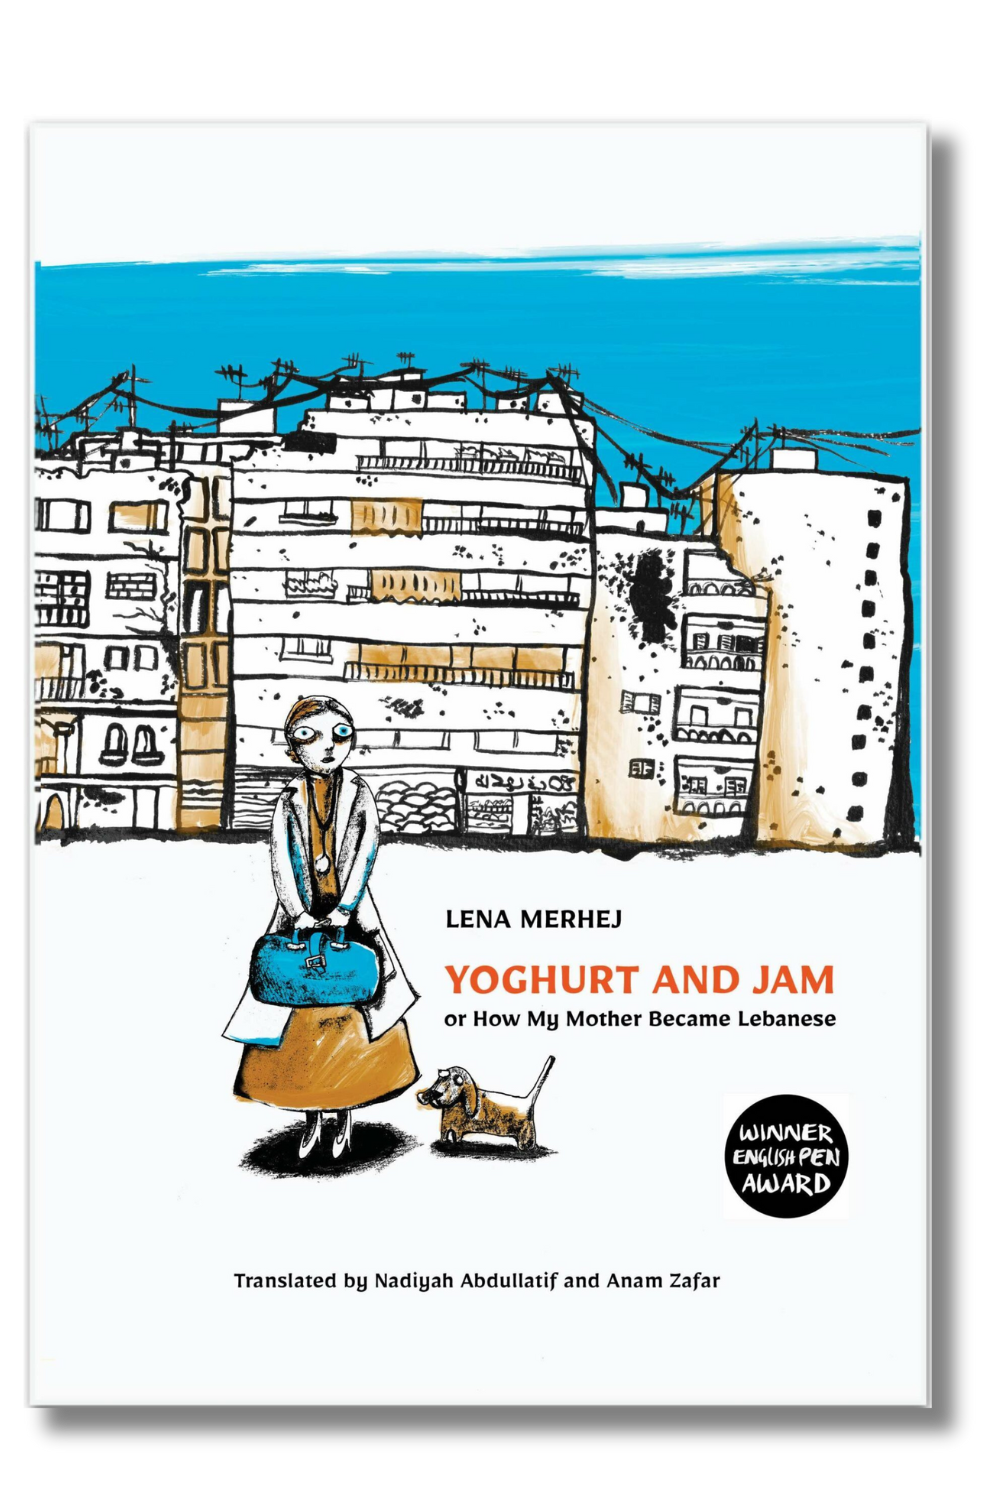 The cover of Lena Merhej's "Yoghurt and Jam," translated by Nadiyah Abdullatif and Anam Zafar